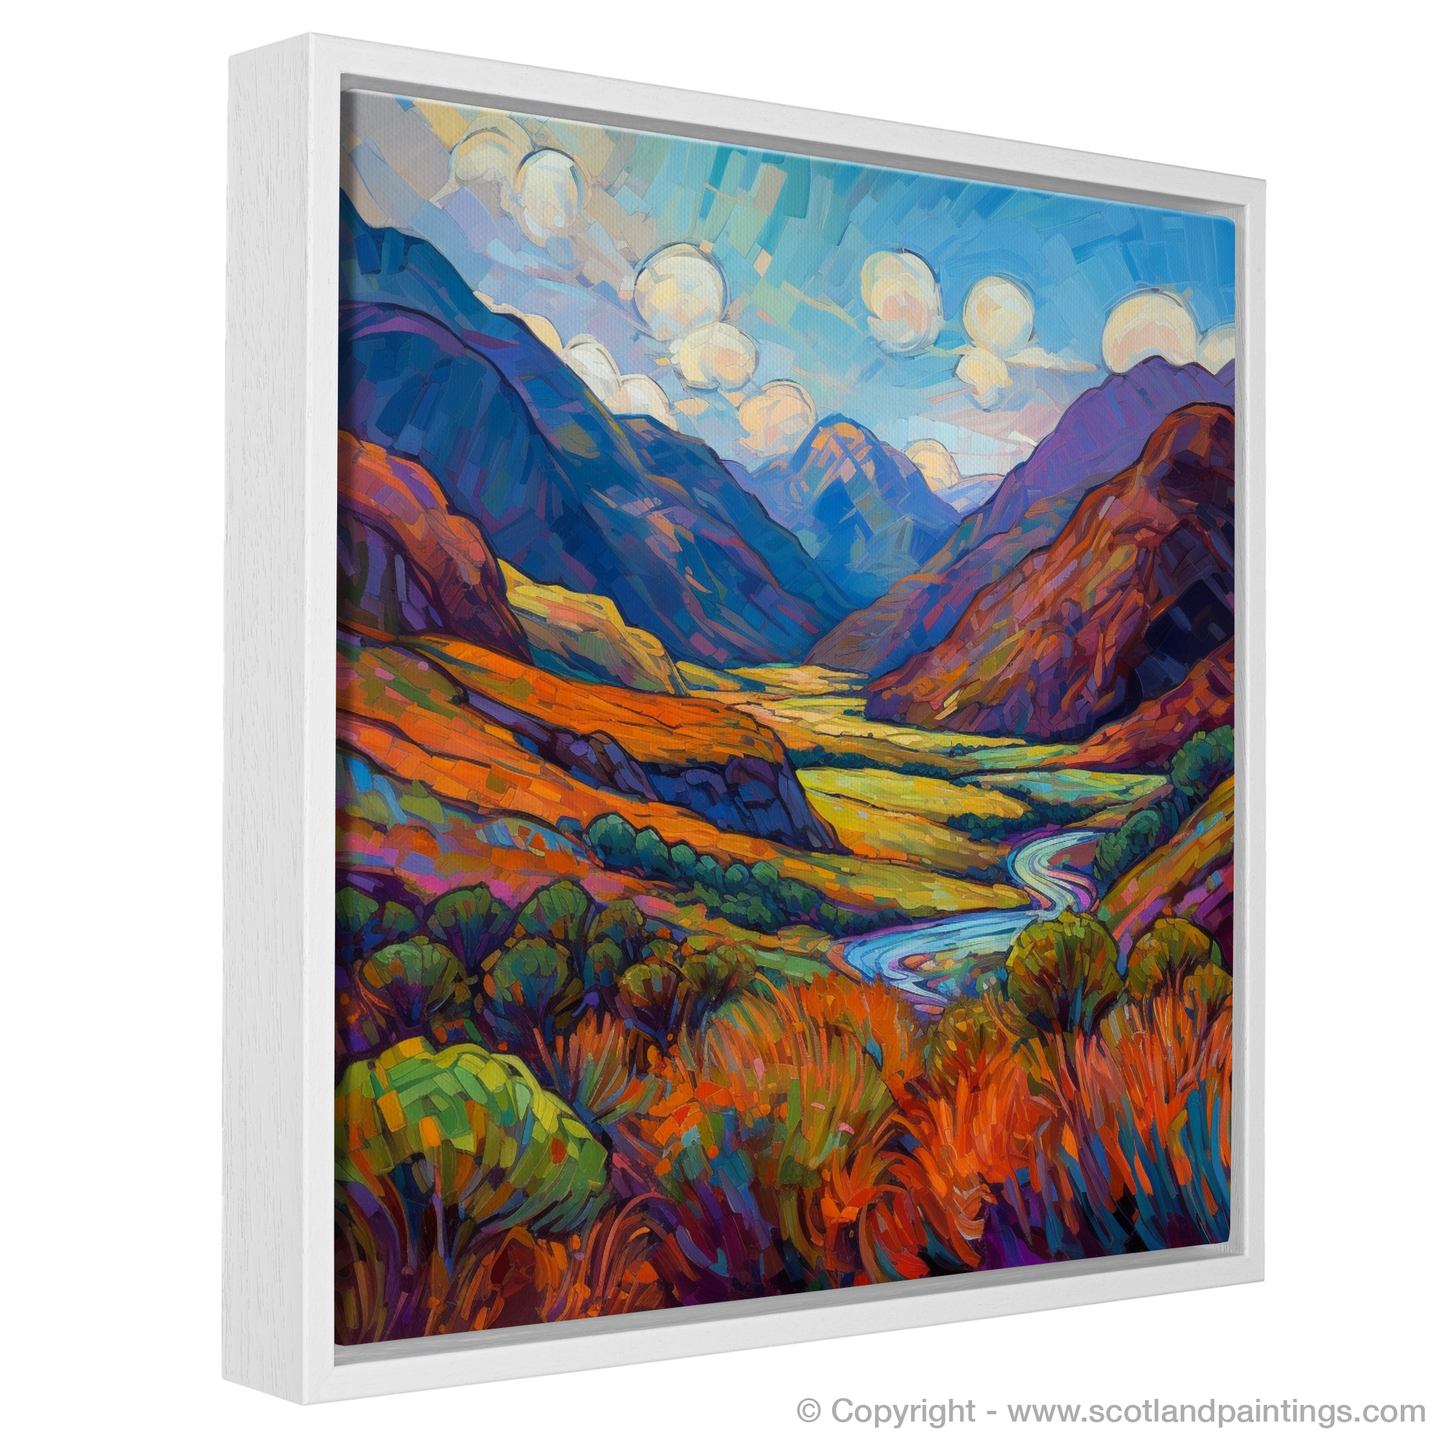 Glen Nevis: A Modern Impressionist Ode to the Scottish Highlands